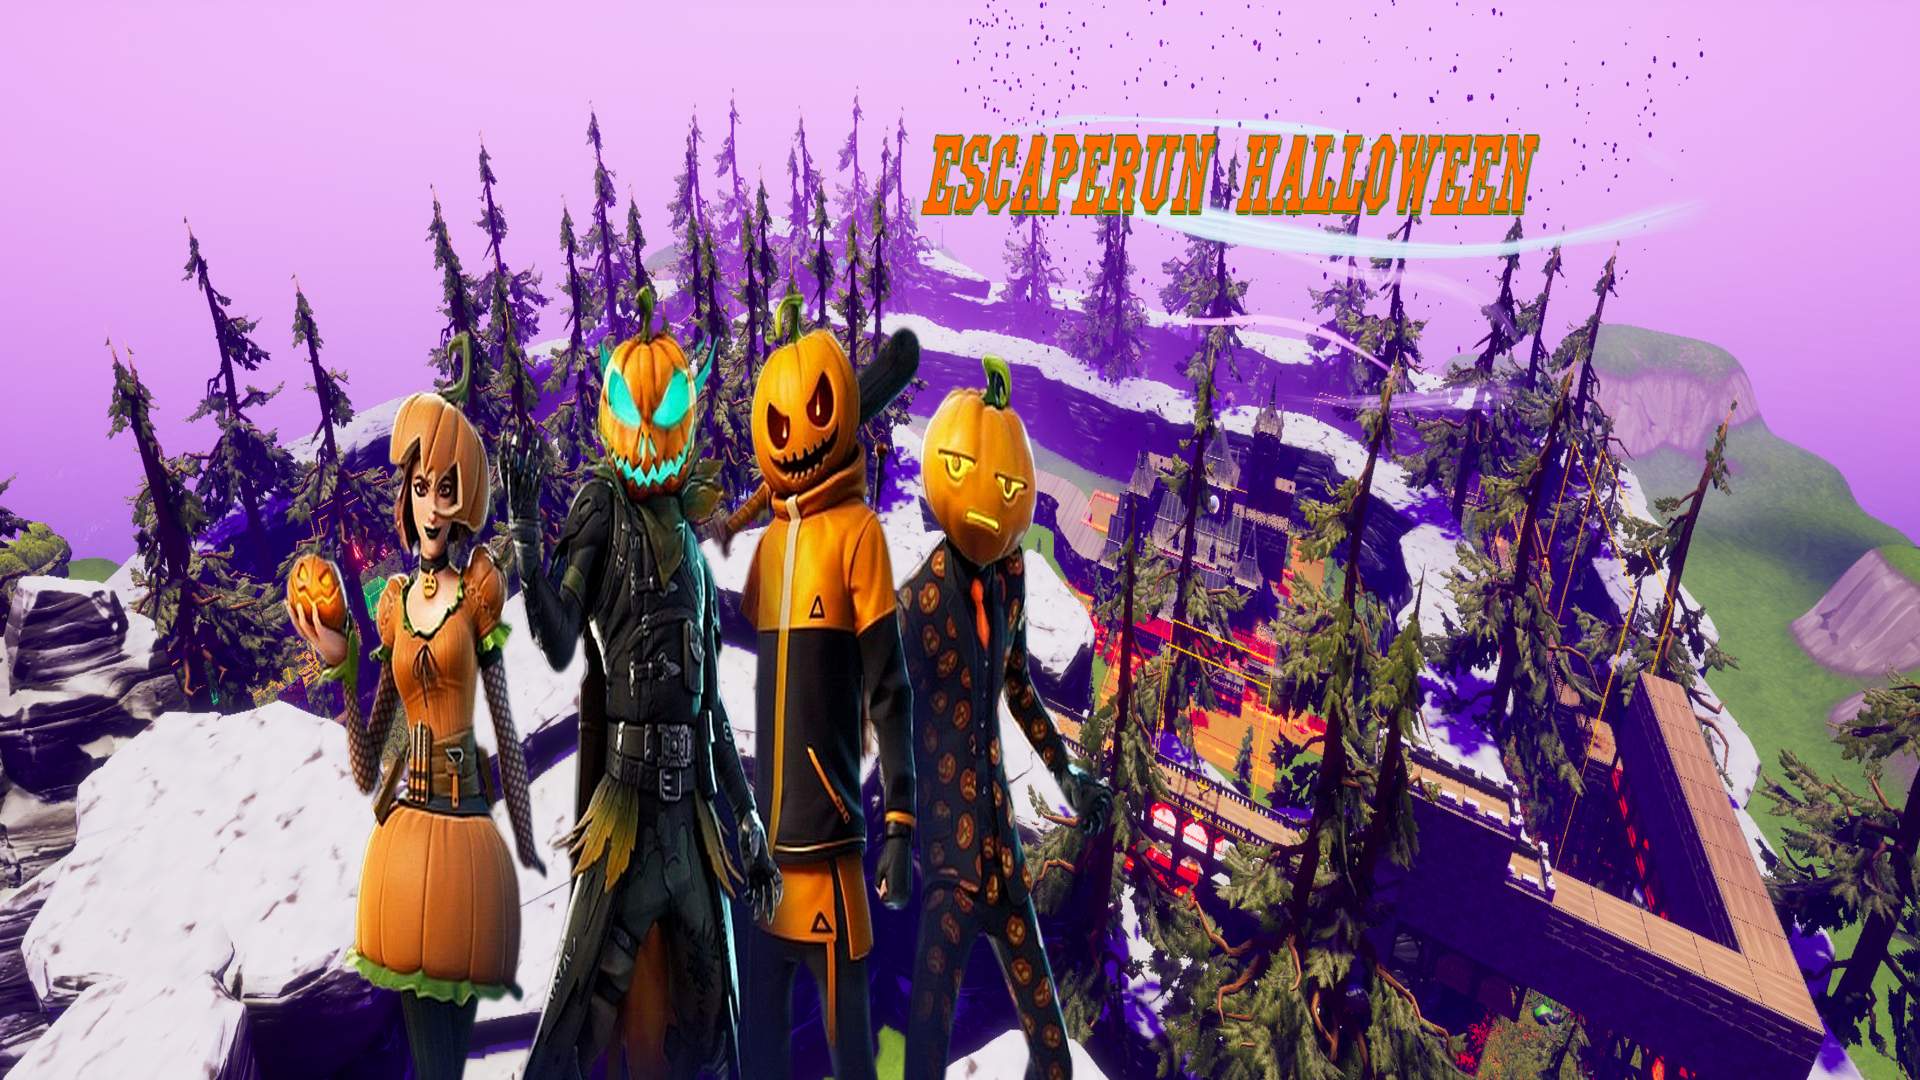 EscapeRun Halloween